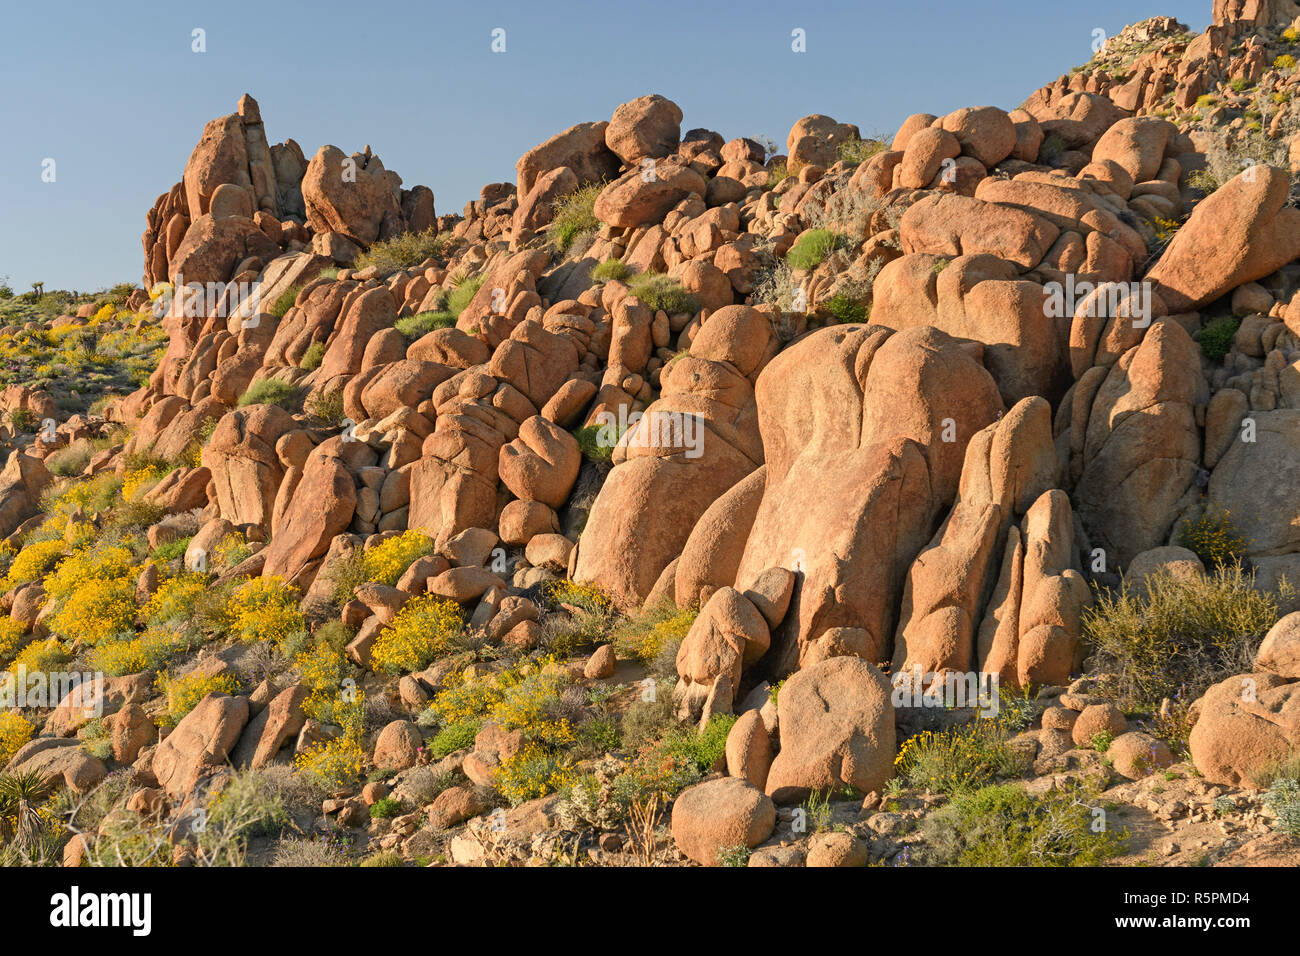 Worn Rocks in the Desert Stock Photo